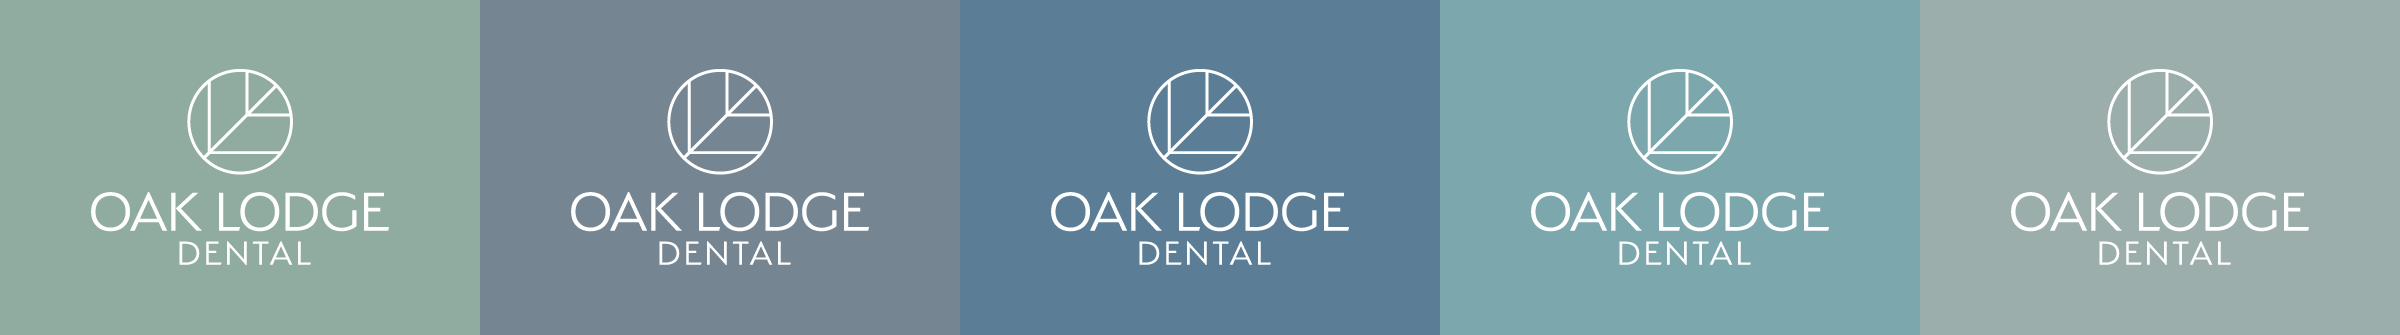 Oak Lodge Dental brand